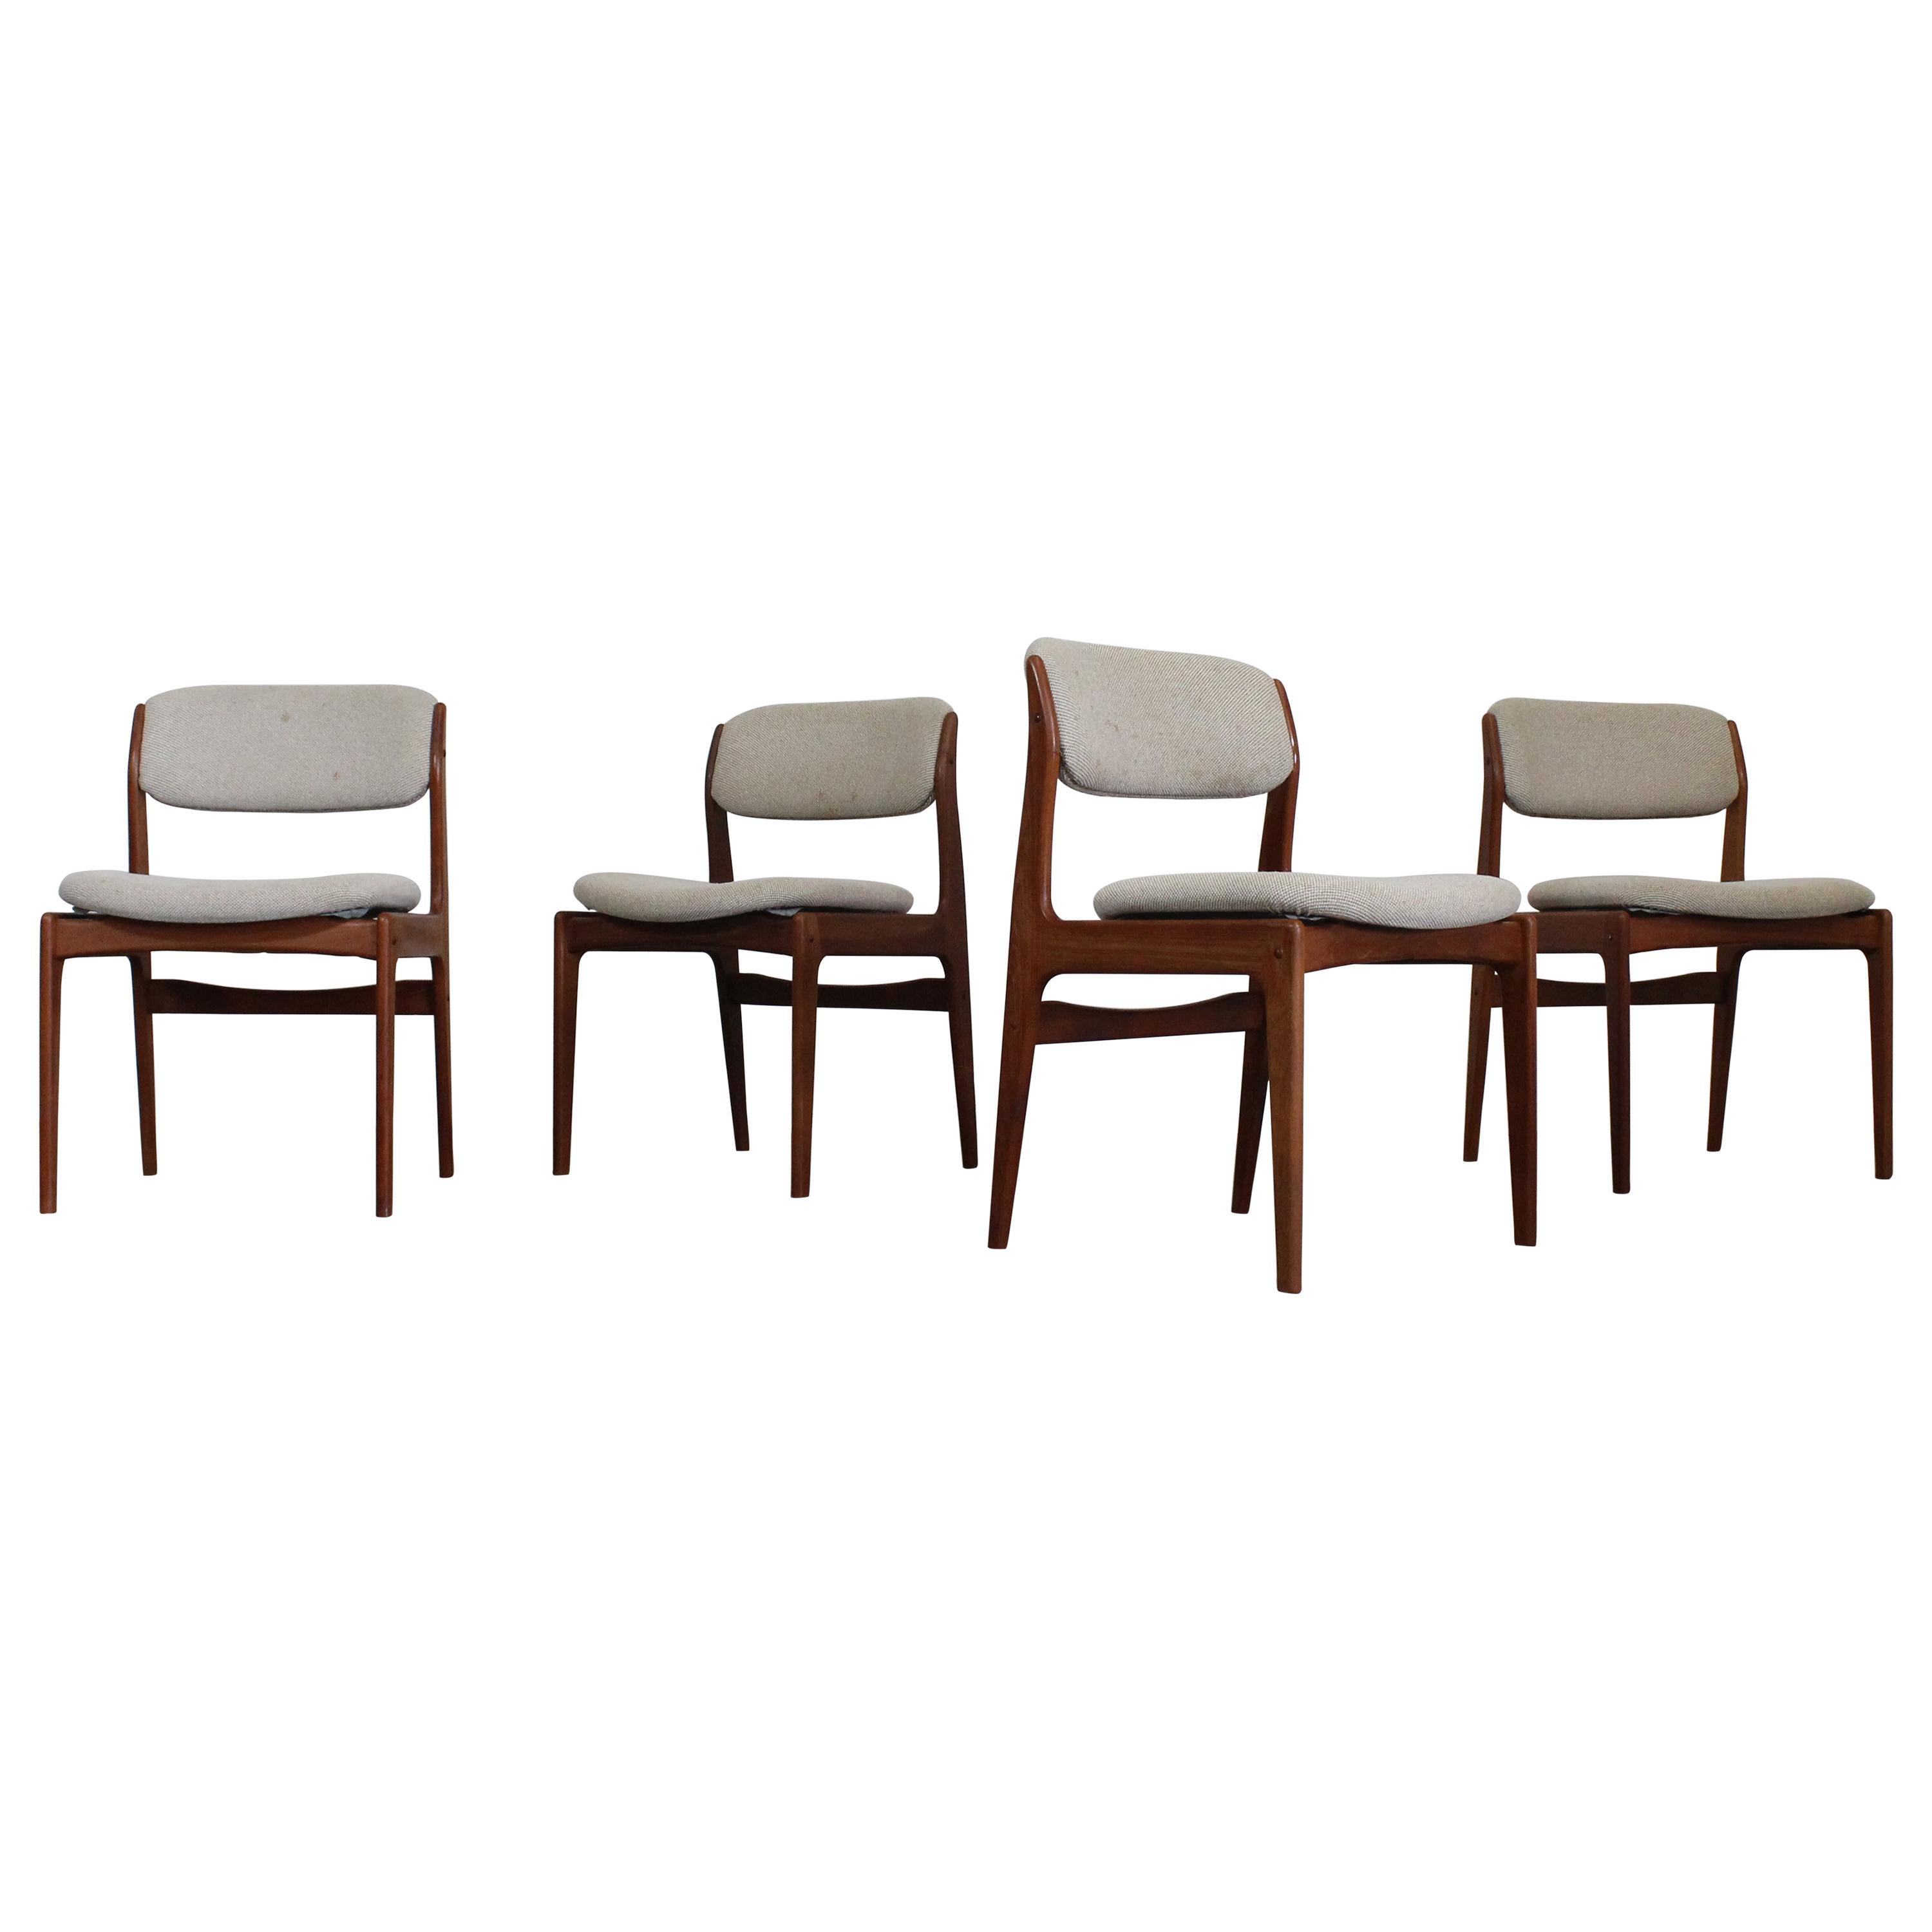 Set of 4 Mid-Century Modern Teak Side Dining Chairs